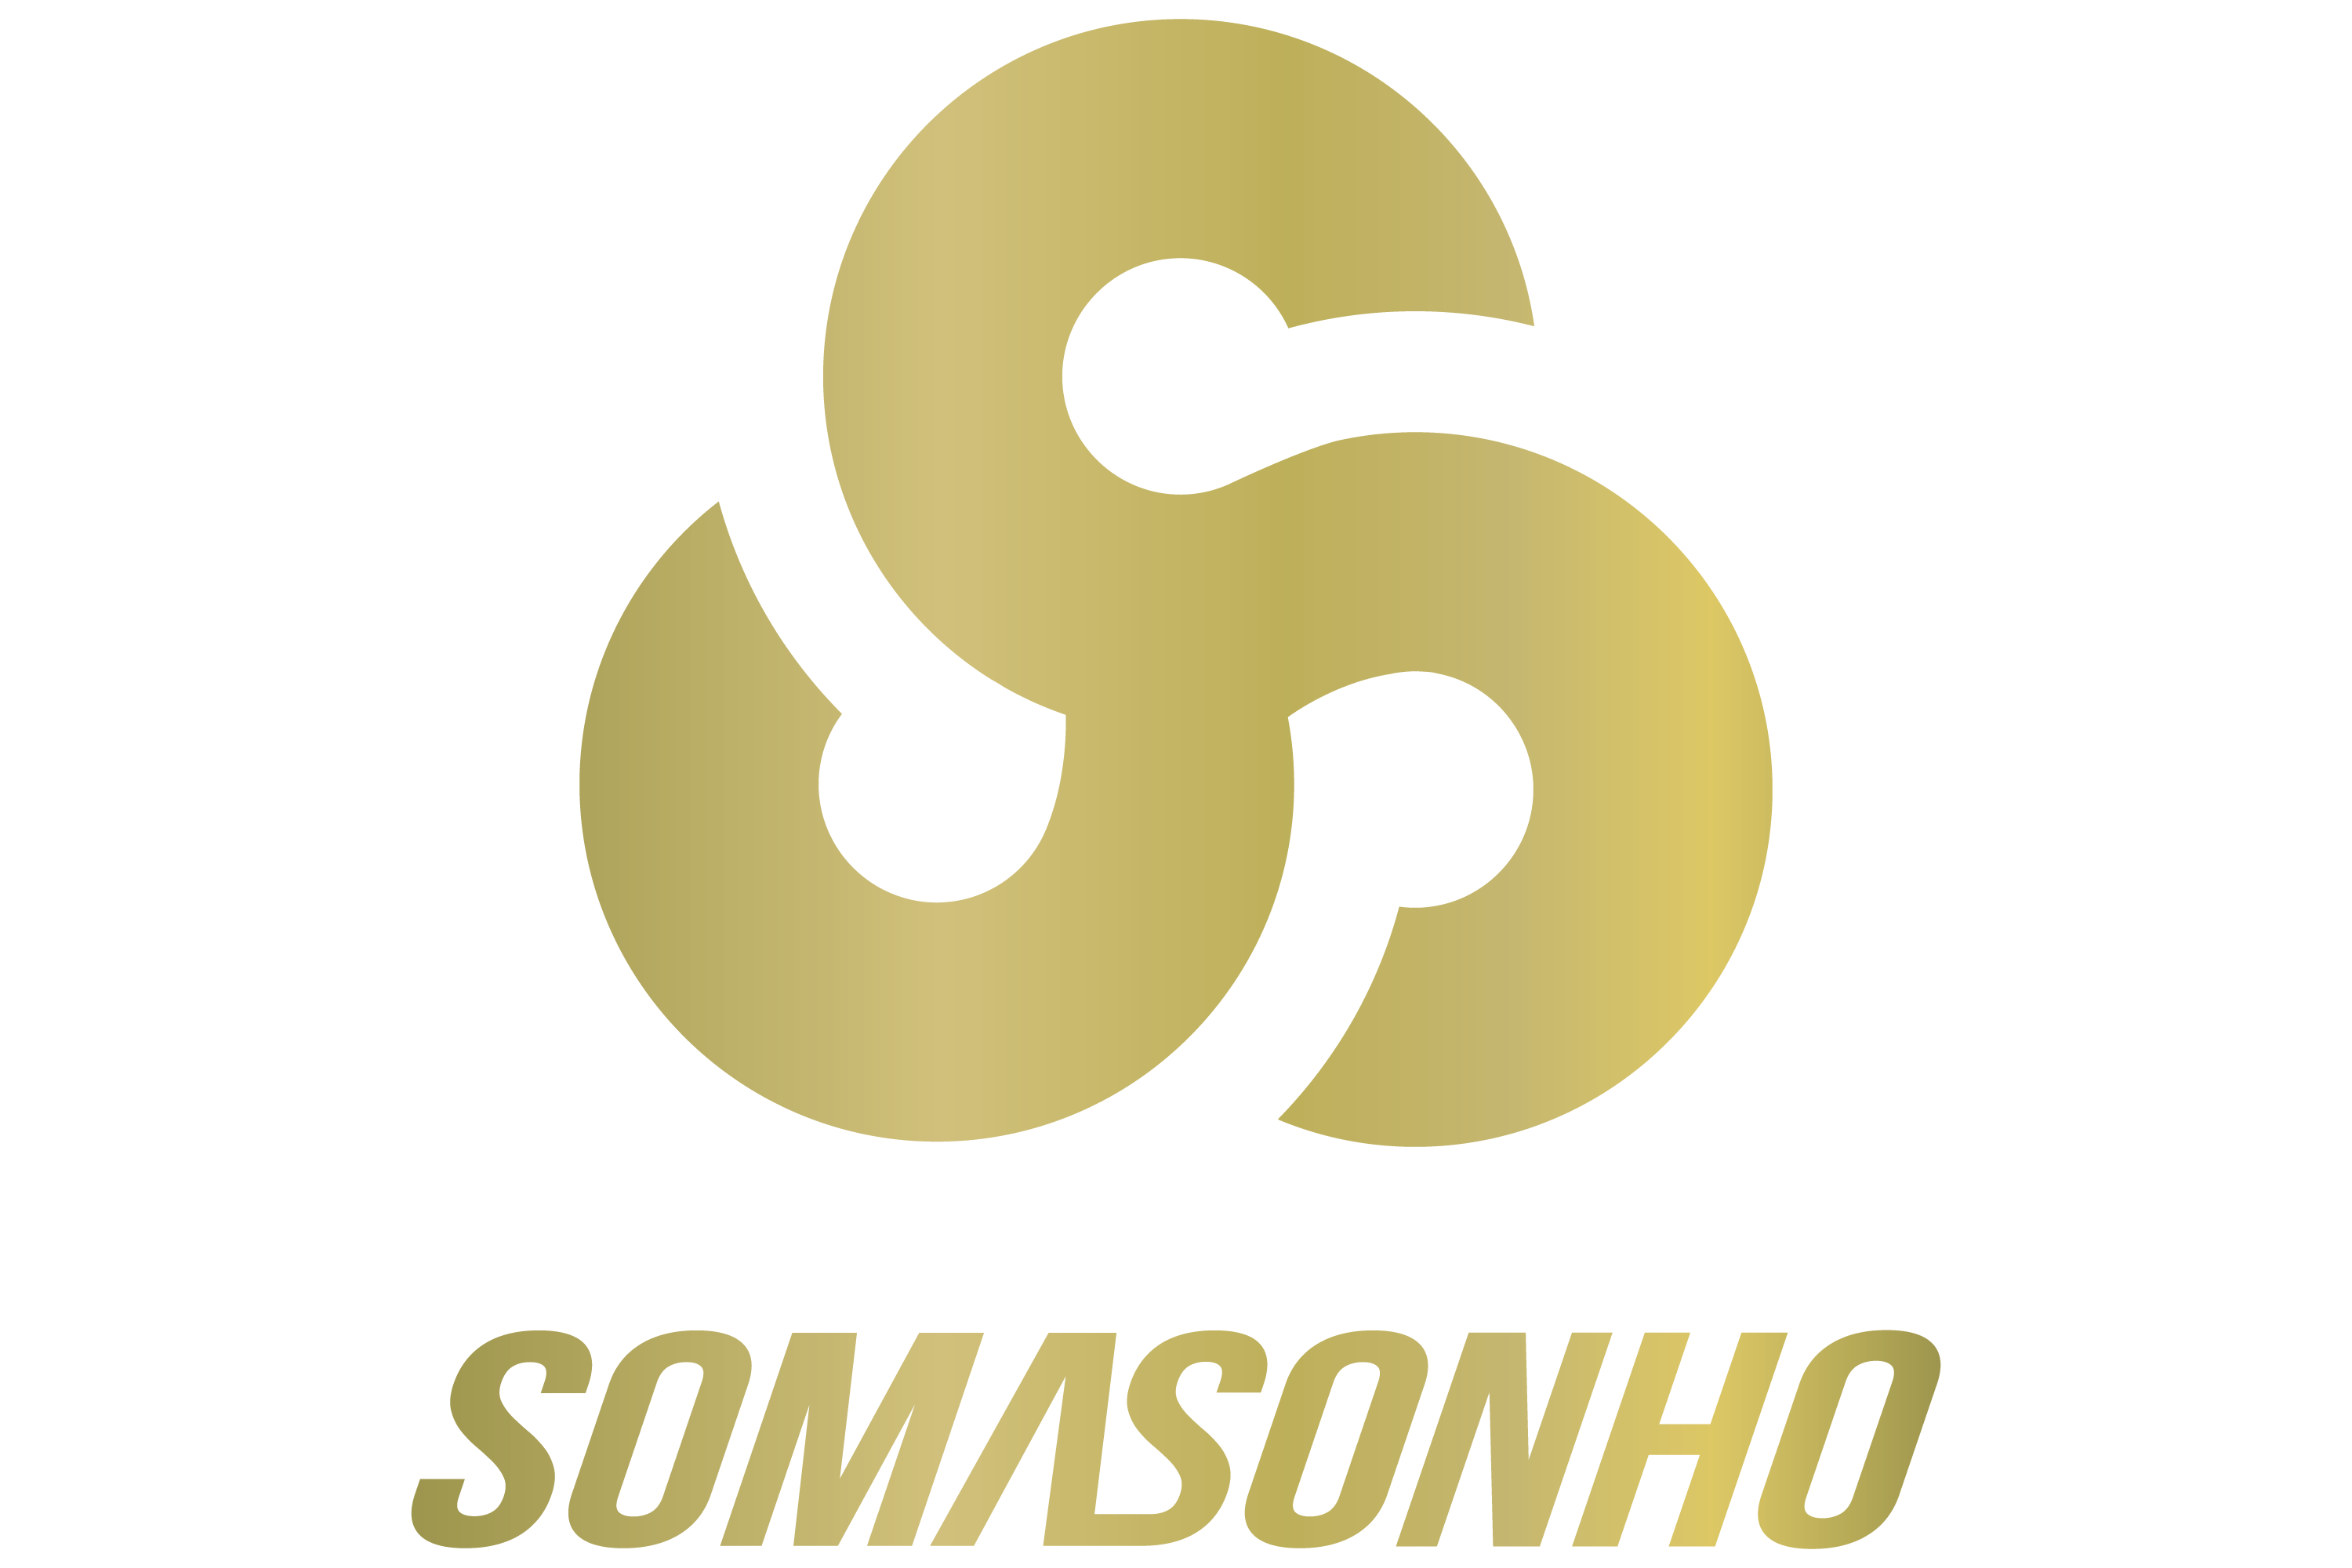 SOMASONHO THE SHOP